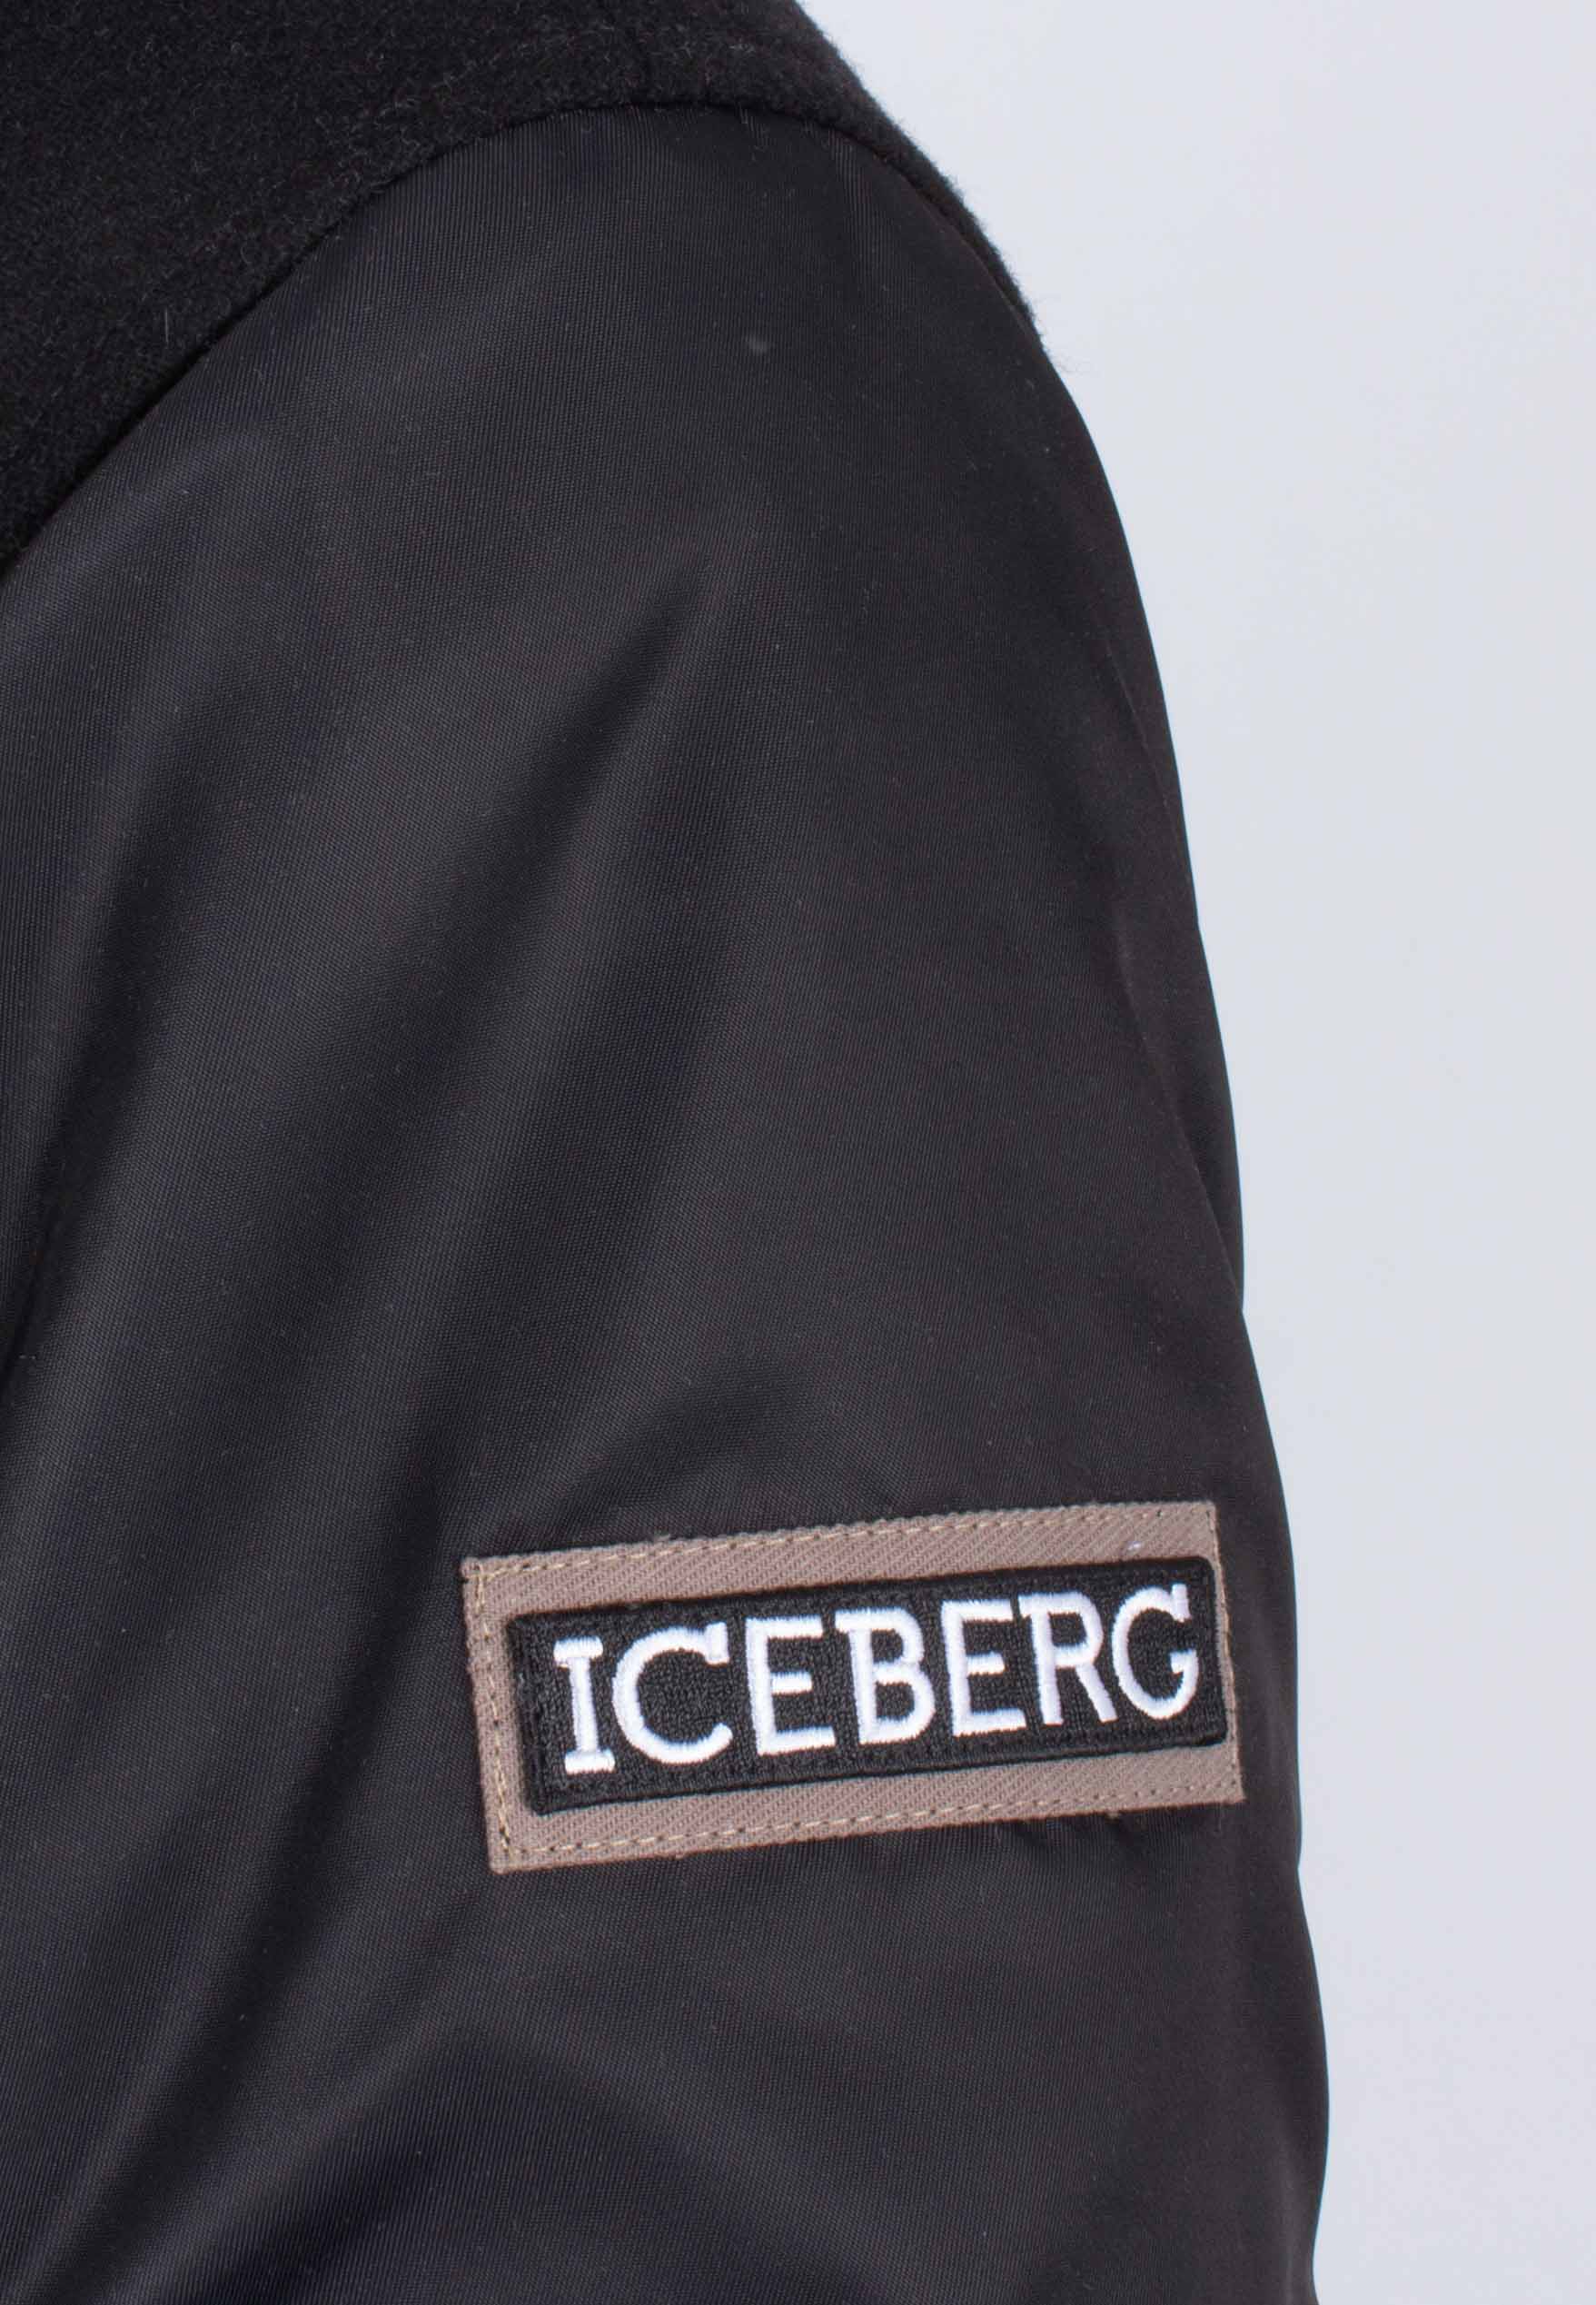 Iceberg Bomberjacke Giubbotto Schwarz